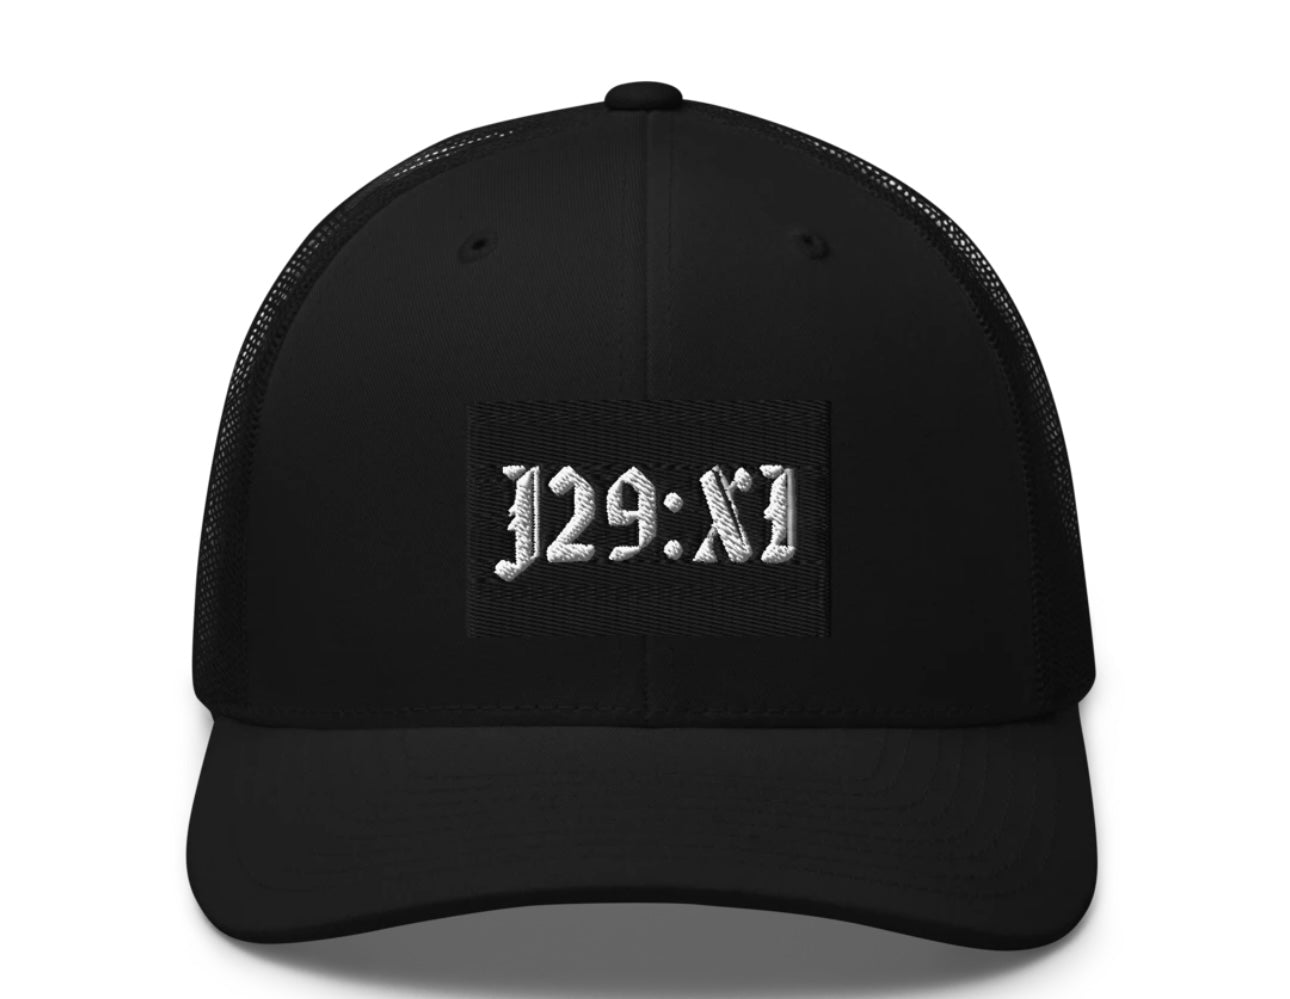 J29:XI Logo Trucker Hat